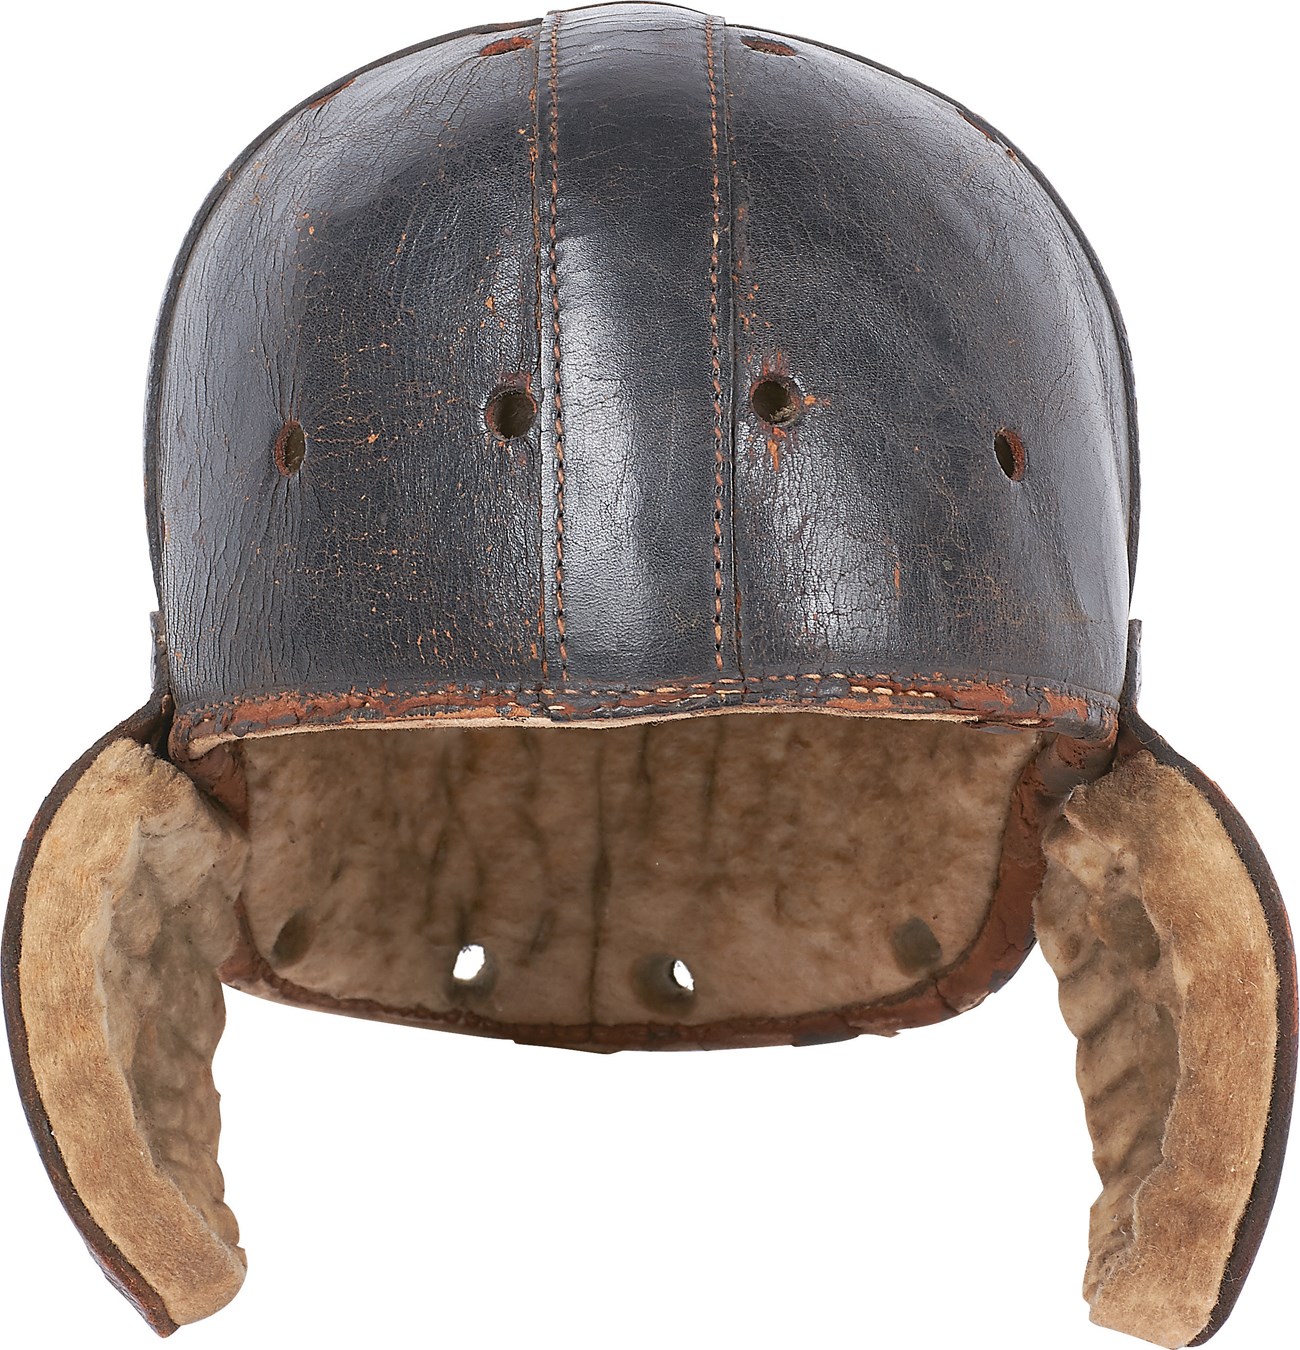 Antique Sporting Goods - 1910s Roman Style Football Helmet